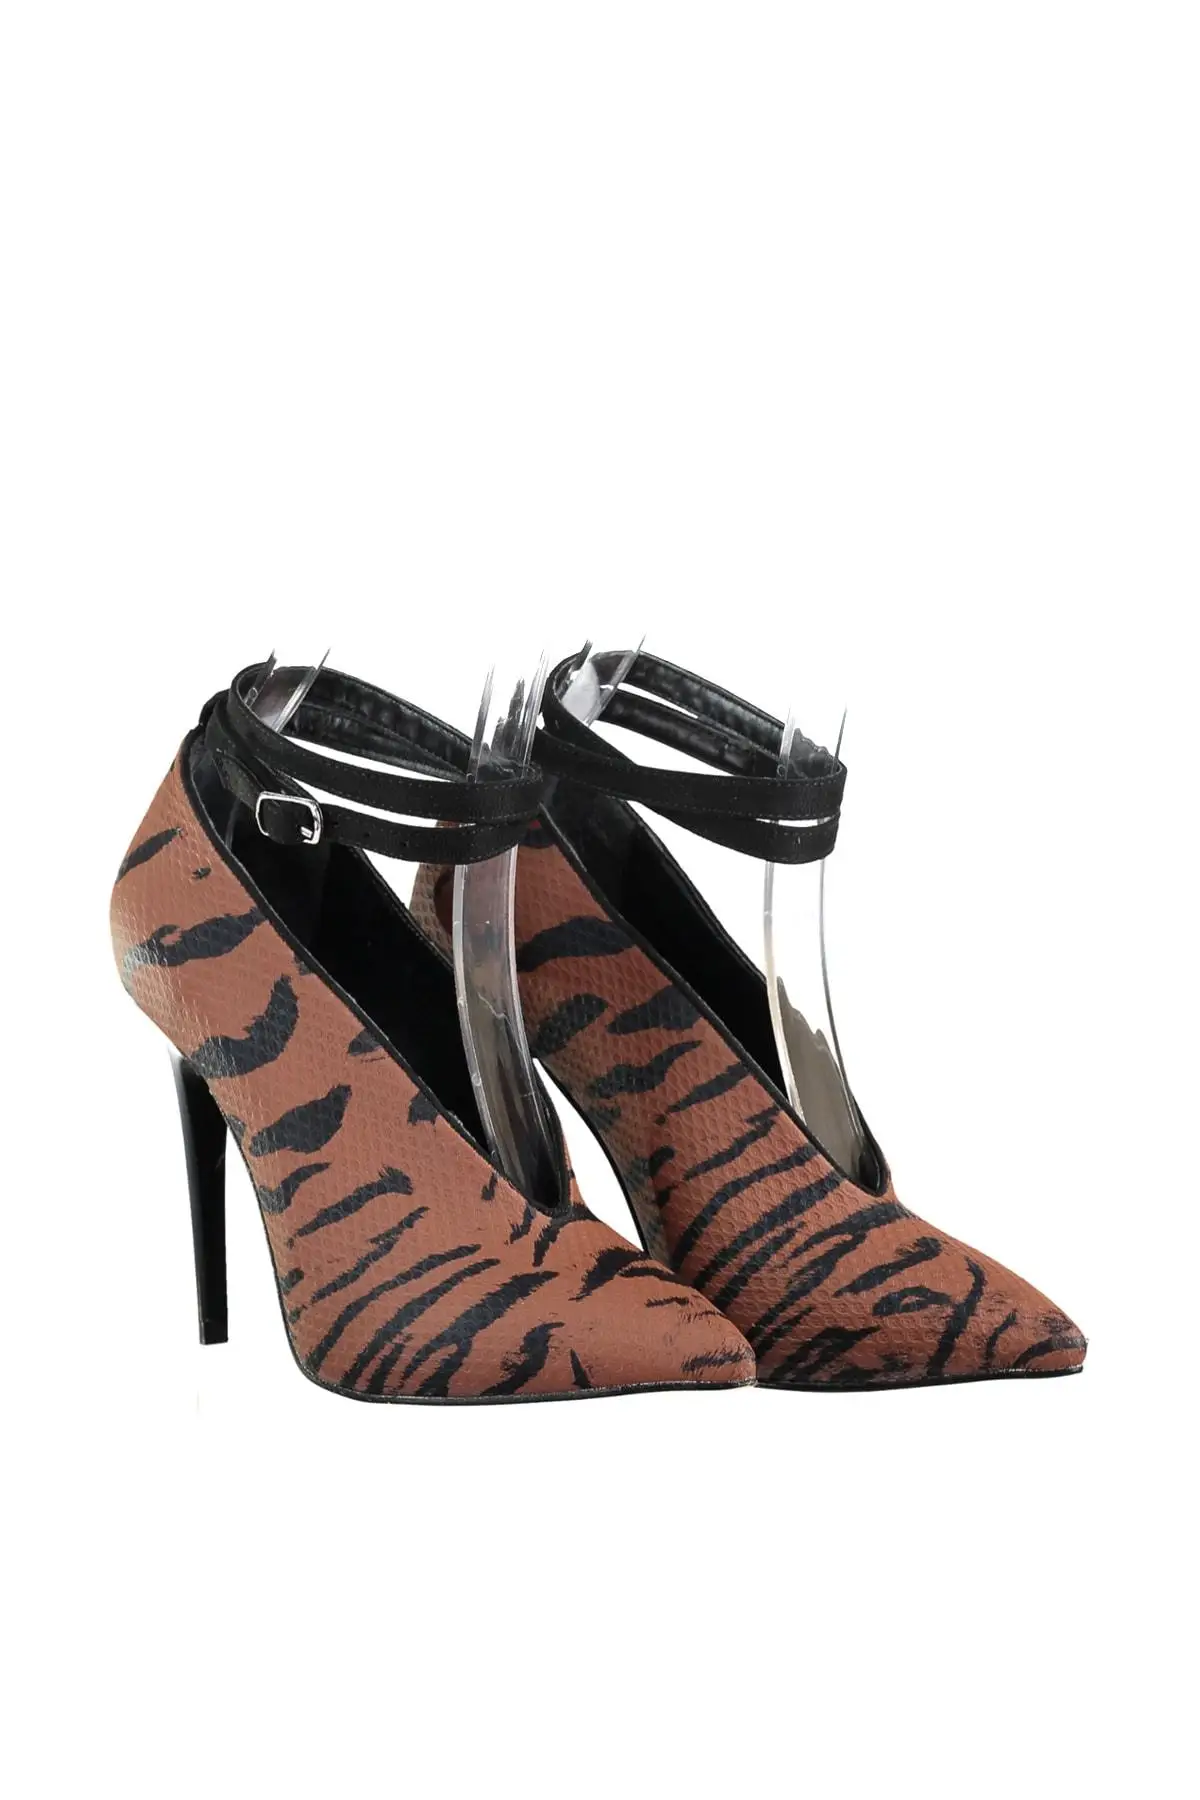 Trendyol/коричневые женские туфли на высоком каблуке с рисунком зебры TAKAW20TO0020